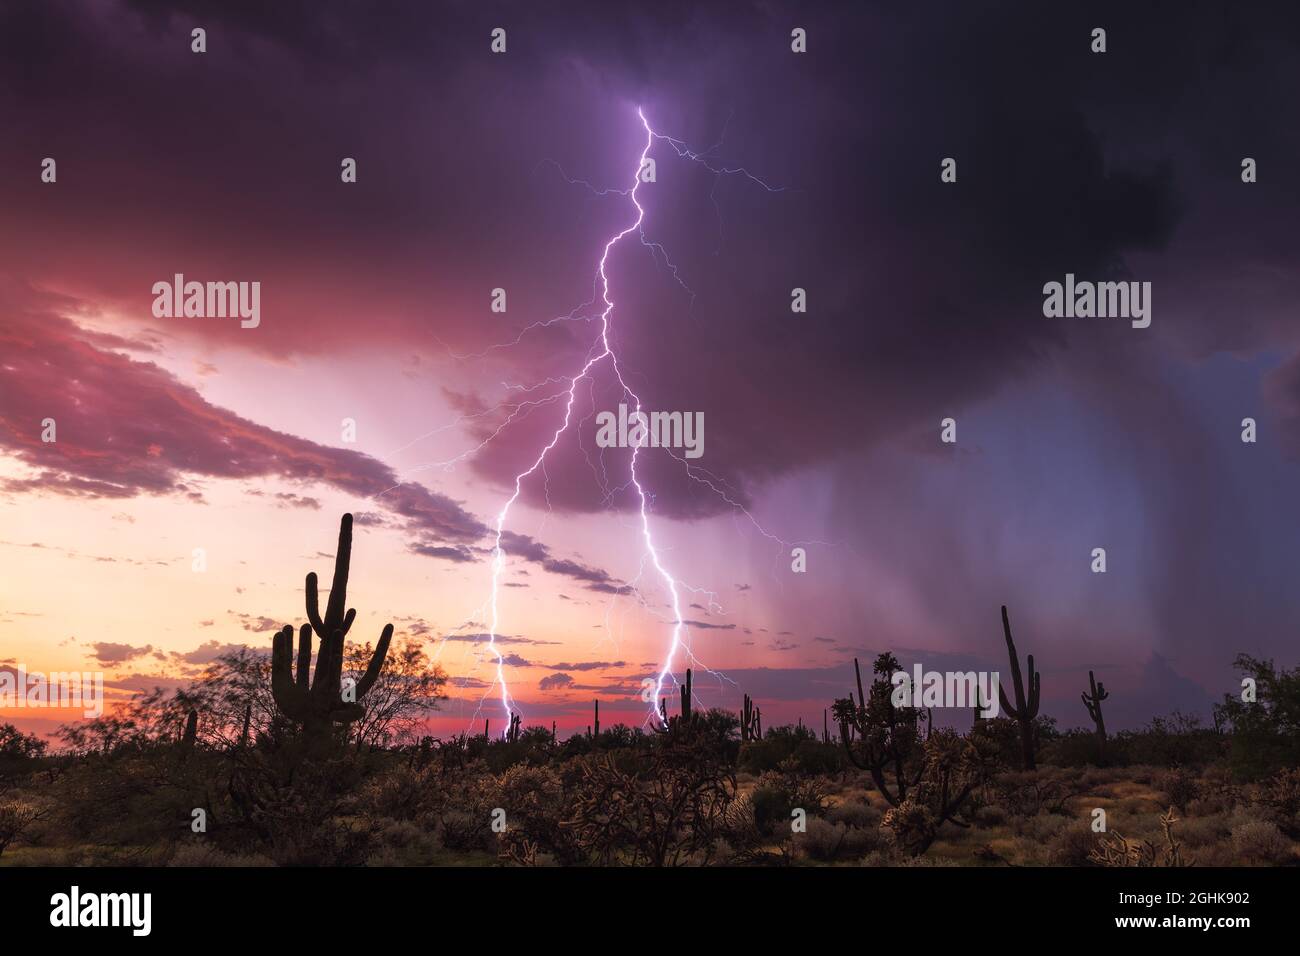 Scenic desert landscape with cactus, lightning and monsoon storm at sunset near Florence, Arizona Stock Photo